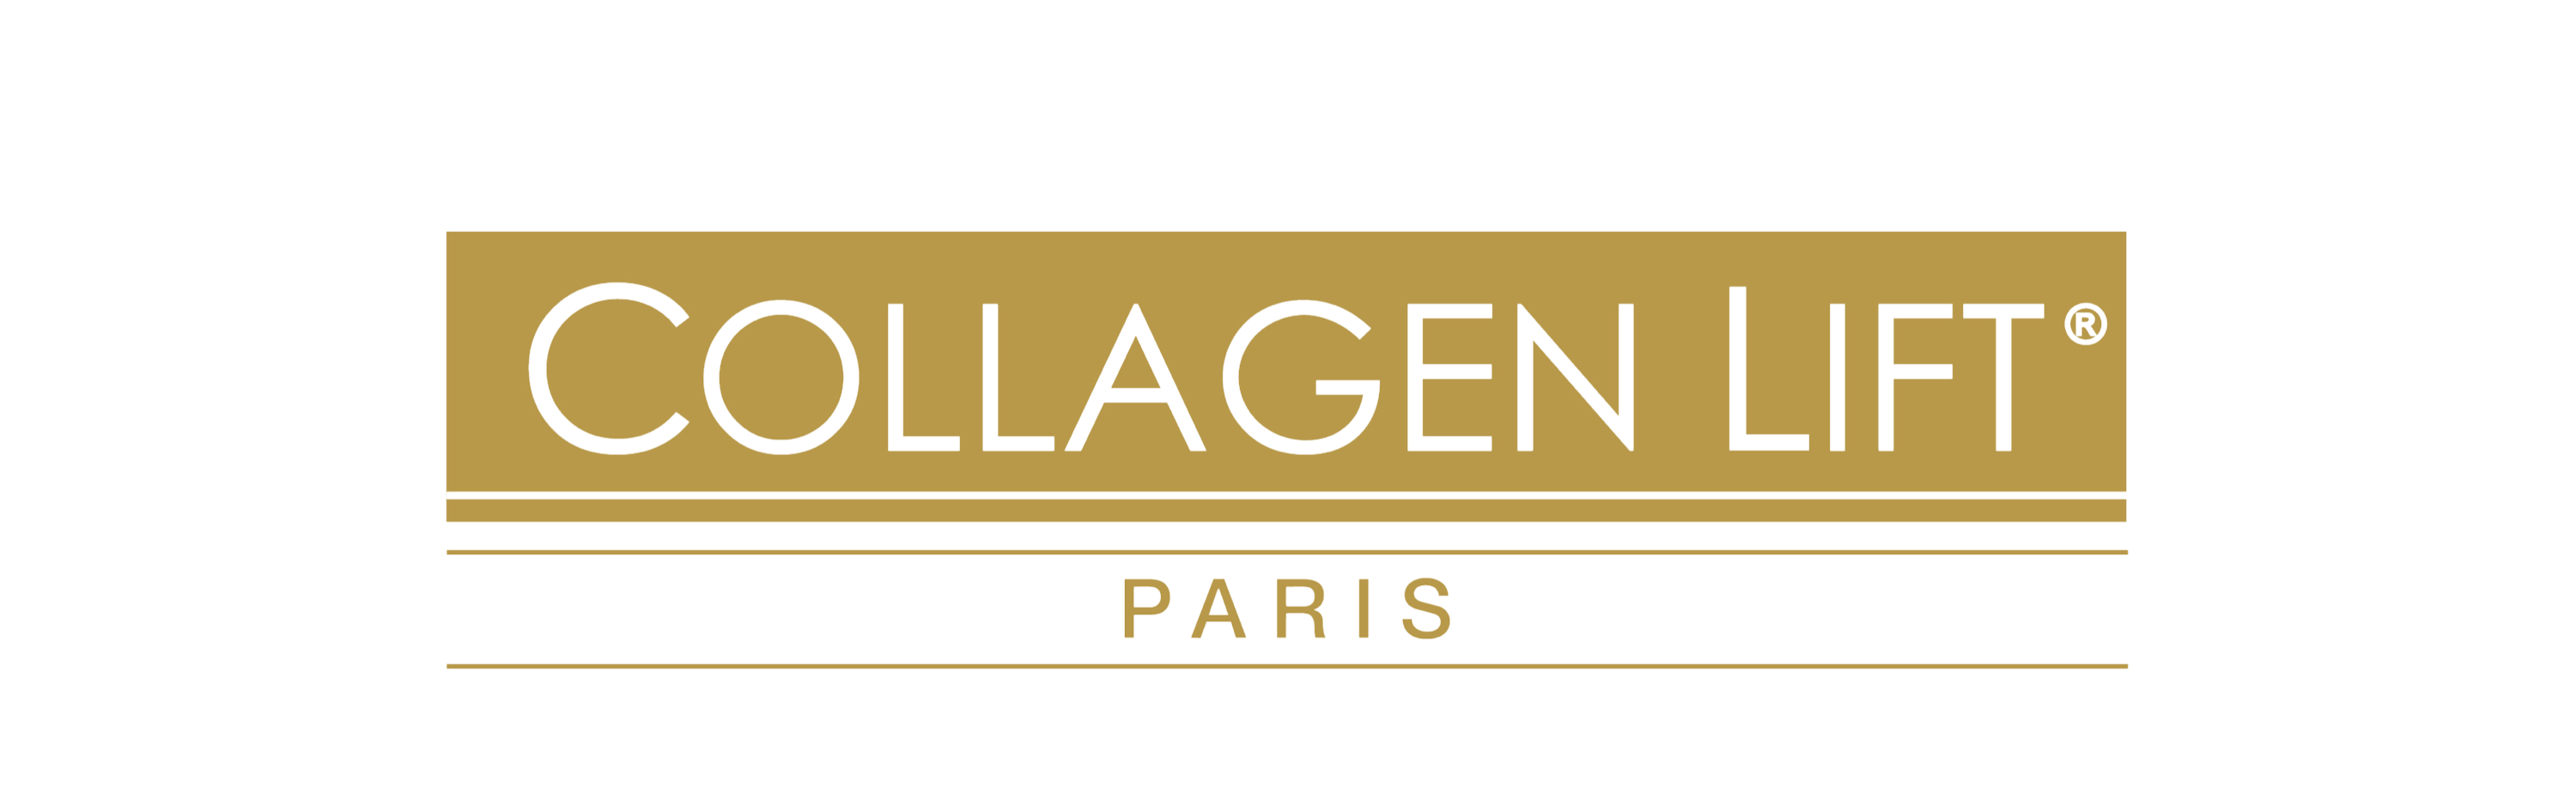 COLLAGEN LIFT PARIS Gold & White (R)_edi